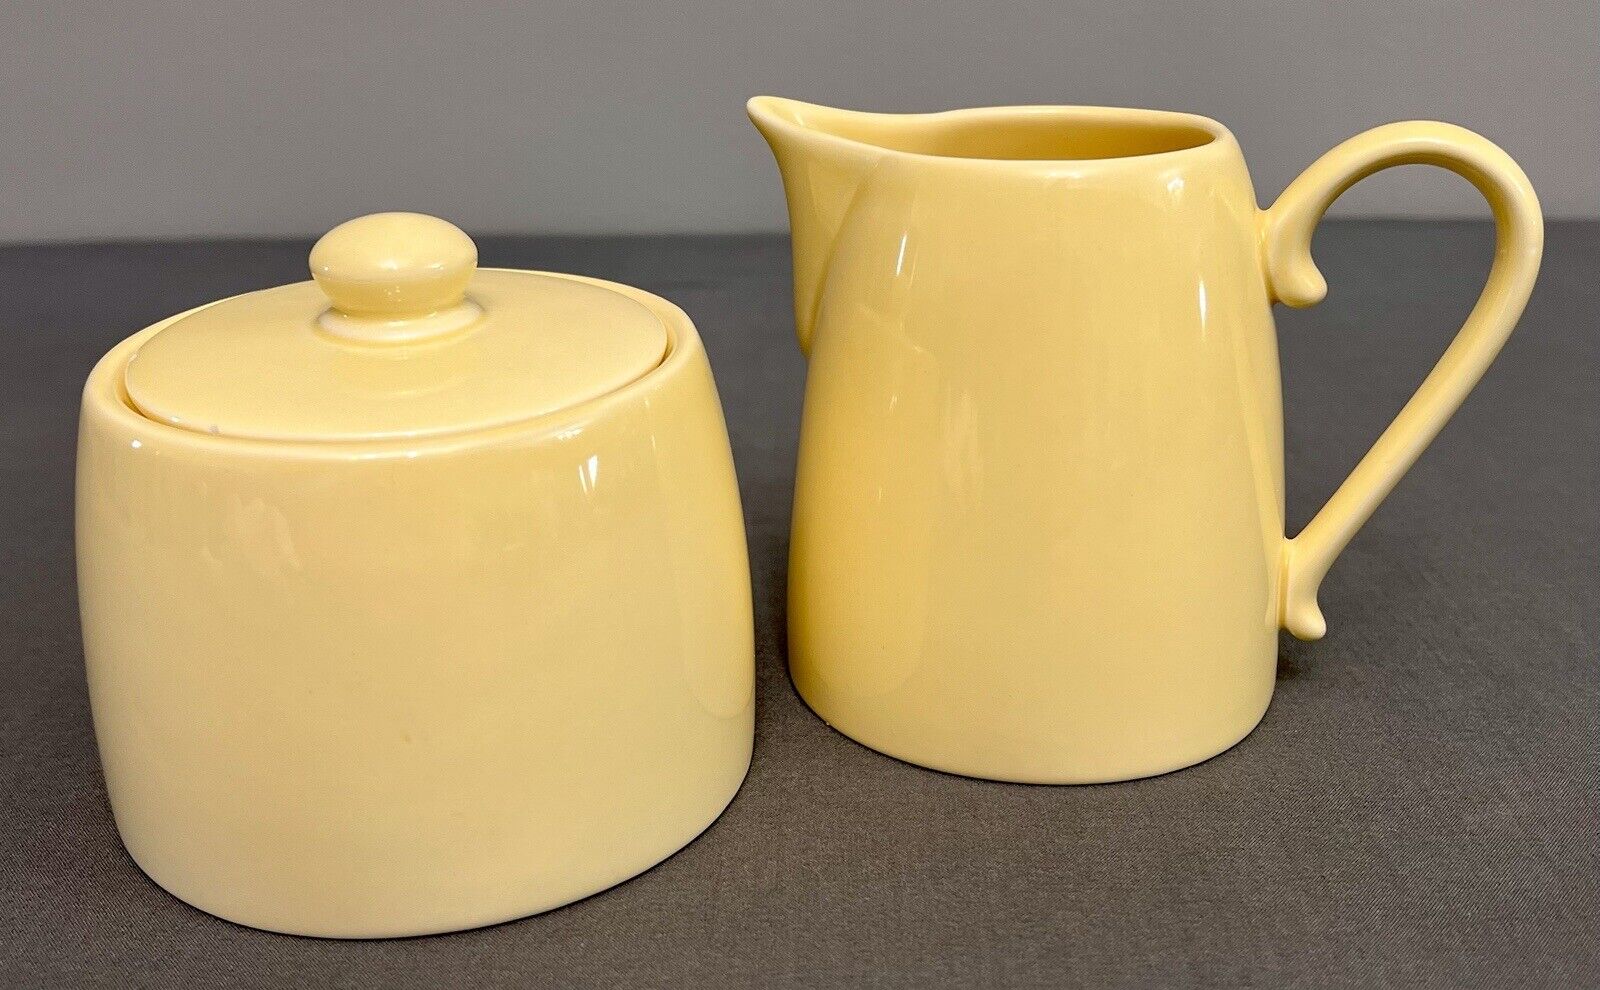 VTG 70s MSE Ceramic Sugar Bowl & Creamer Pale Yellow